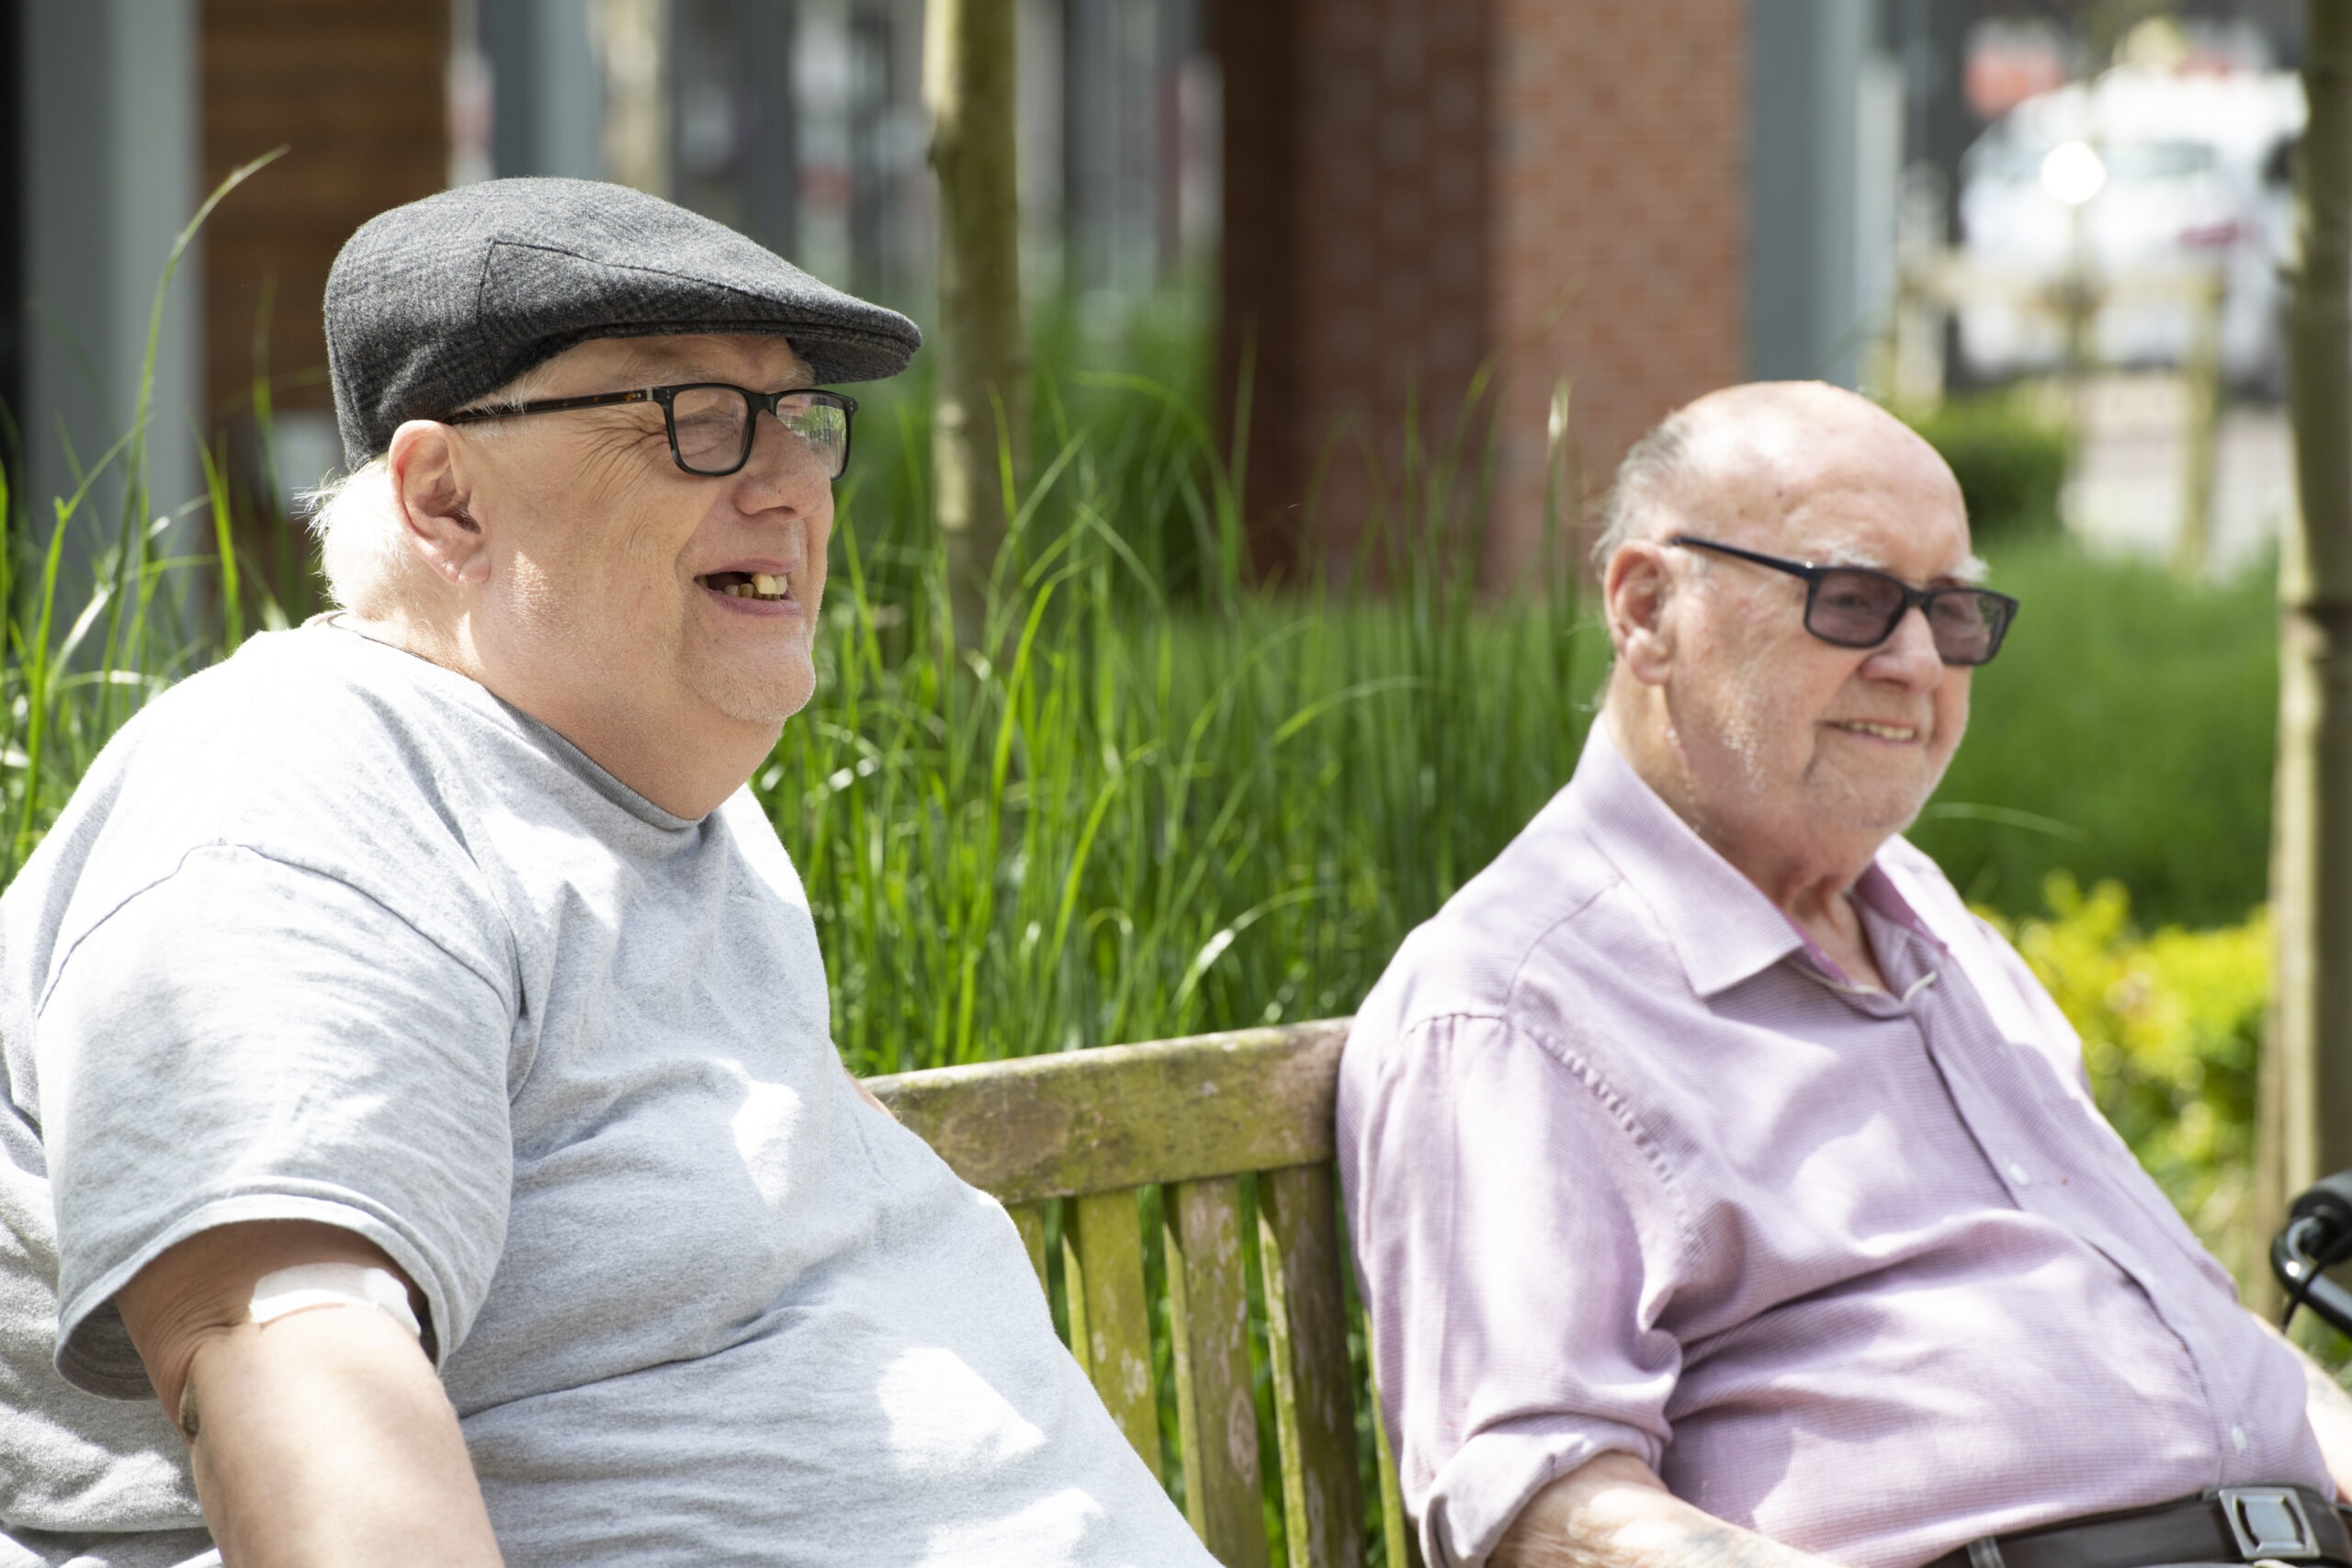 Two elderly men sat on a bench